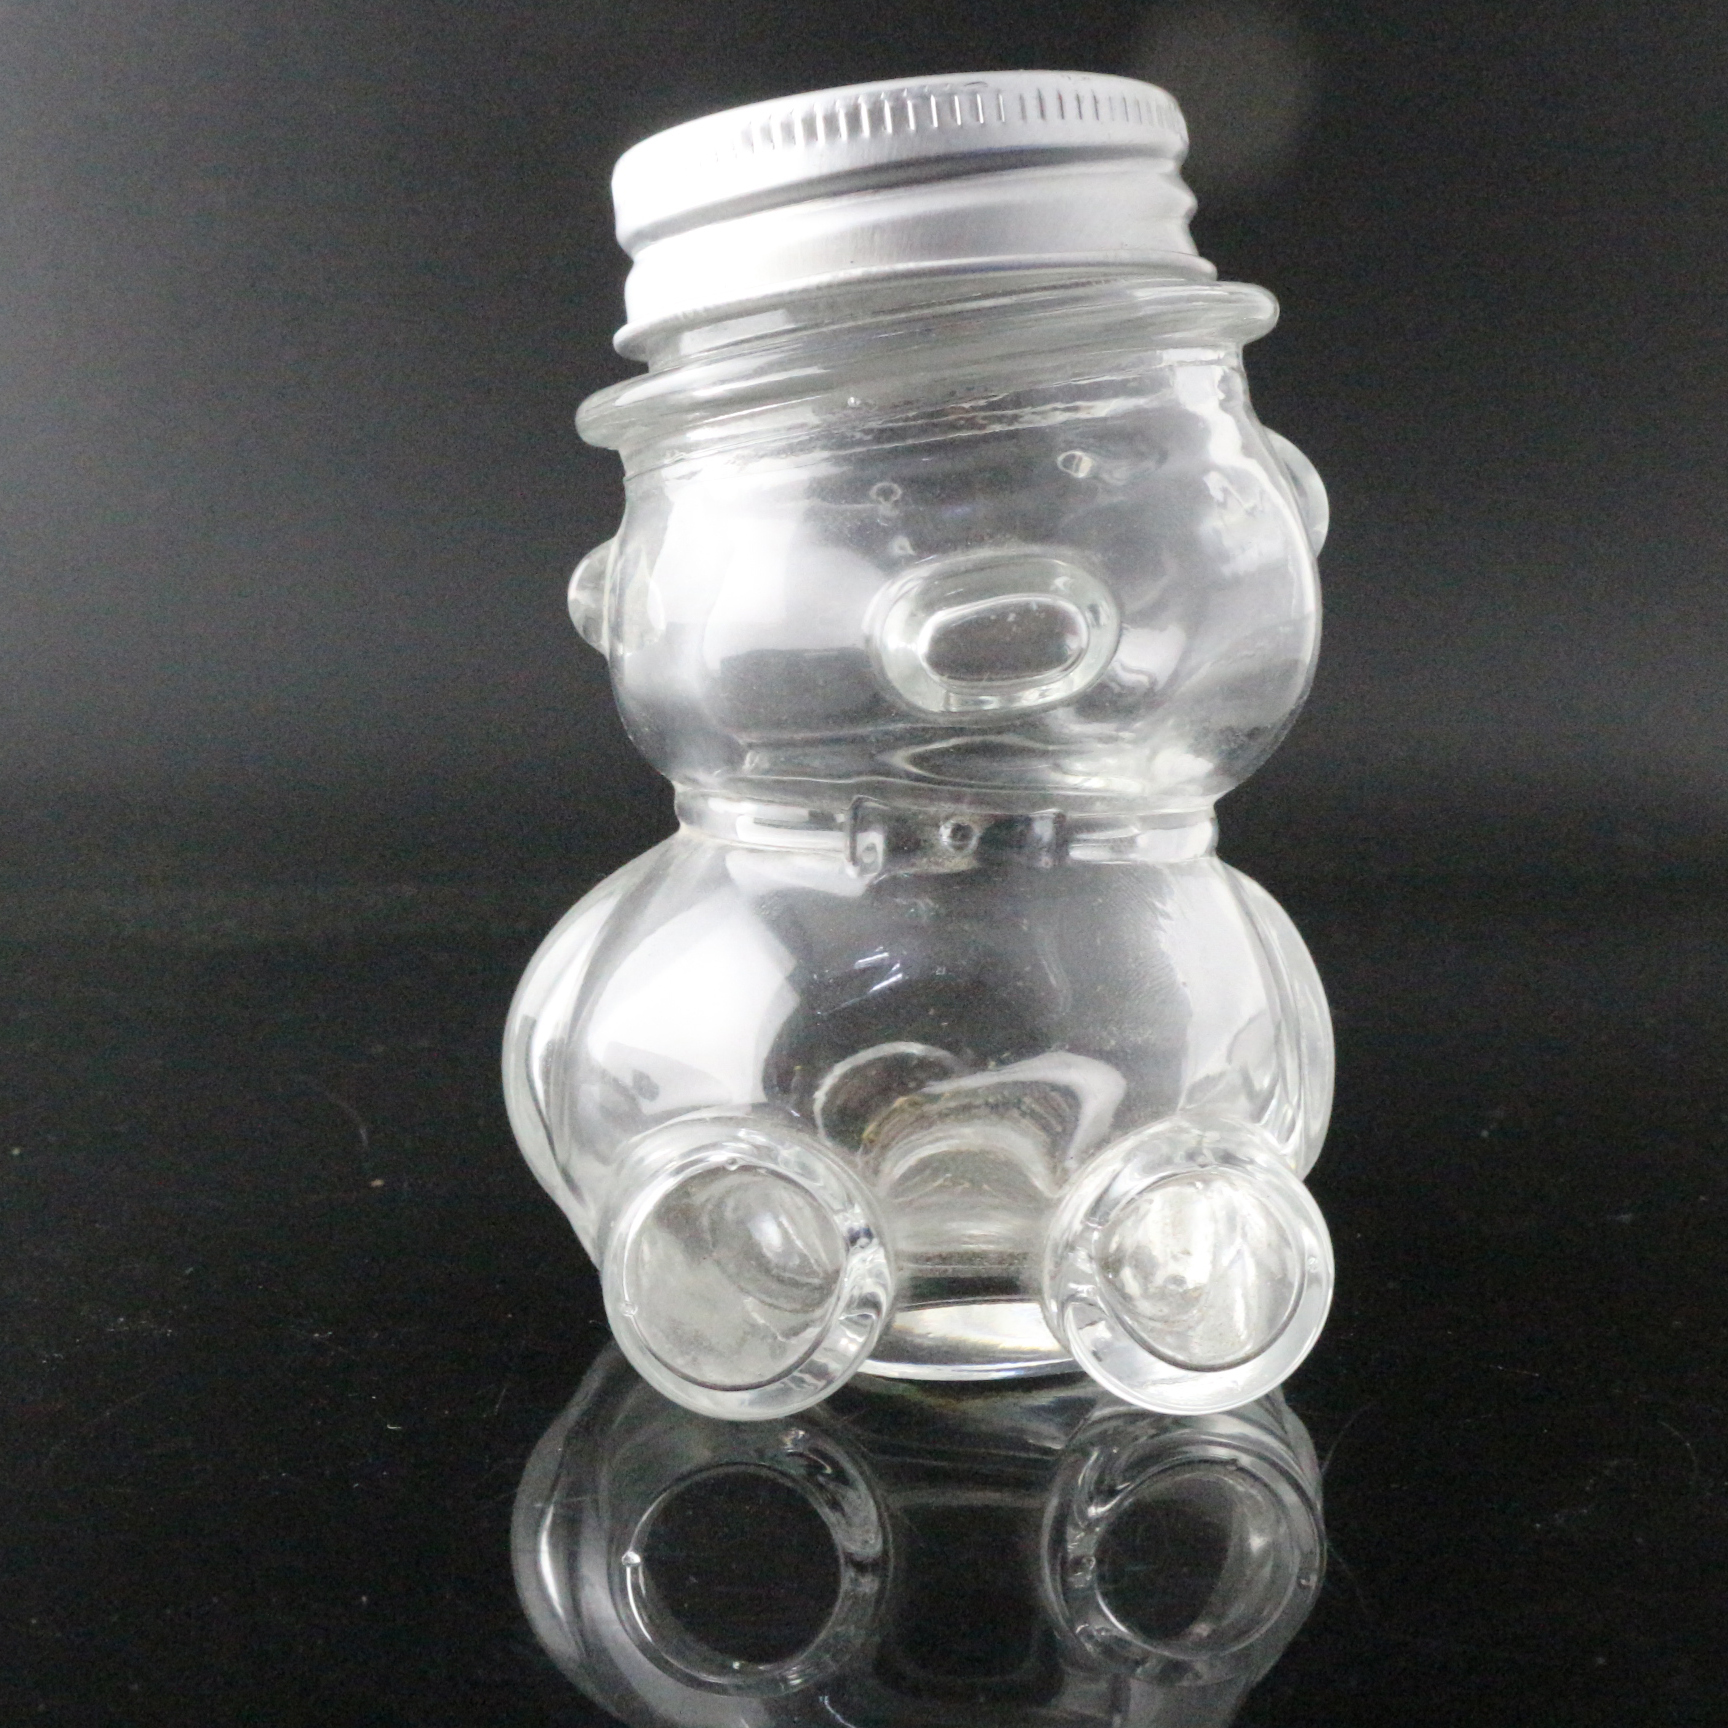 China China Wholesale Pharmaceutical Glass Bottles 9 Oz Honey Bear Shaped Candy Glass Jar Glass Bottle With Black White Gold Metal Lid 8oz 7oz 6oz 5oz 4oz 3oz 2oz 1oz